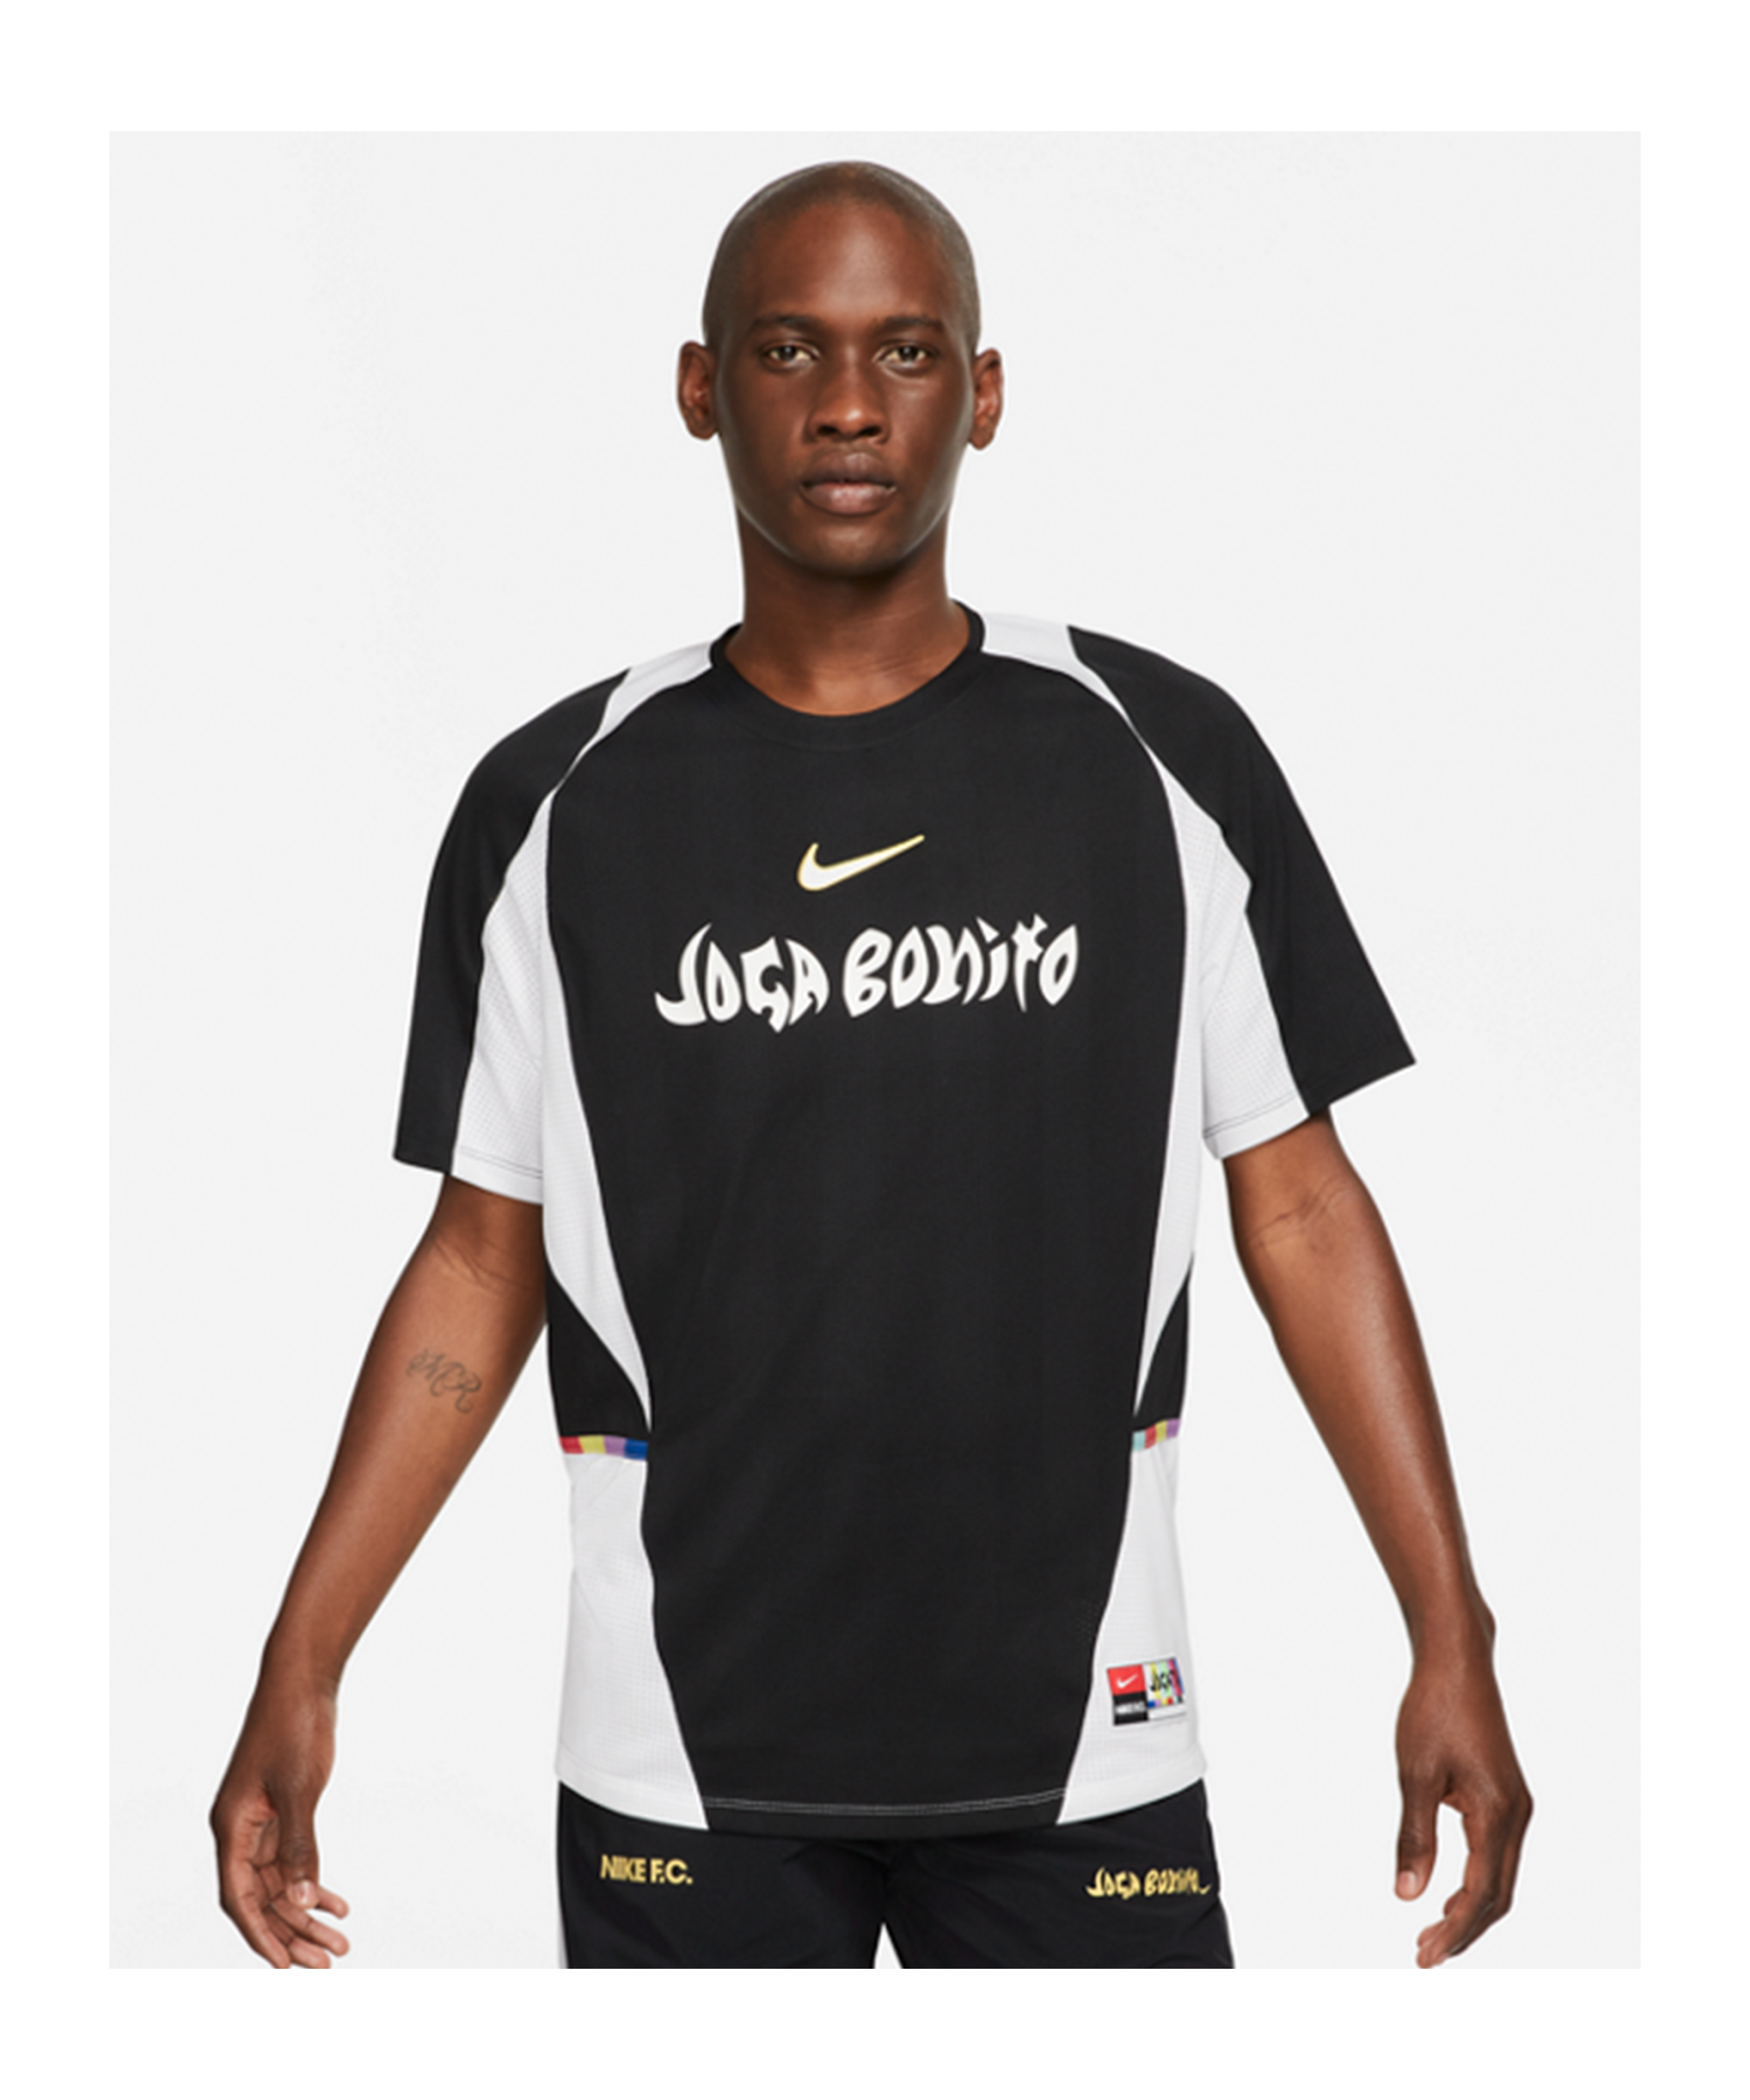 proyector Soportar Engañoso Nike F.C. Joga Bonito Home Jersey T-Shirt - Black